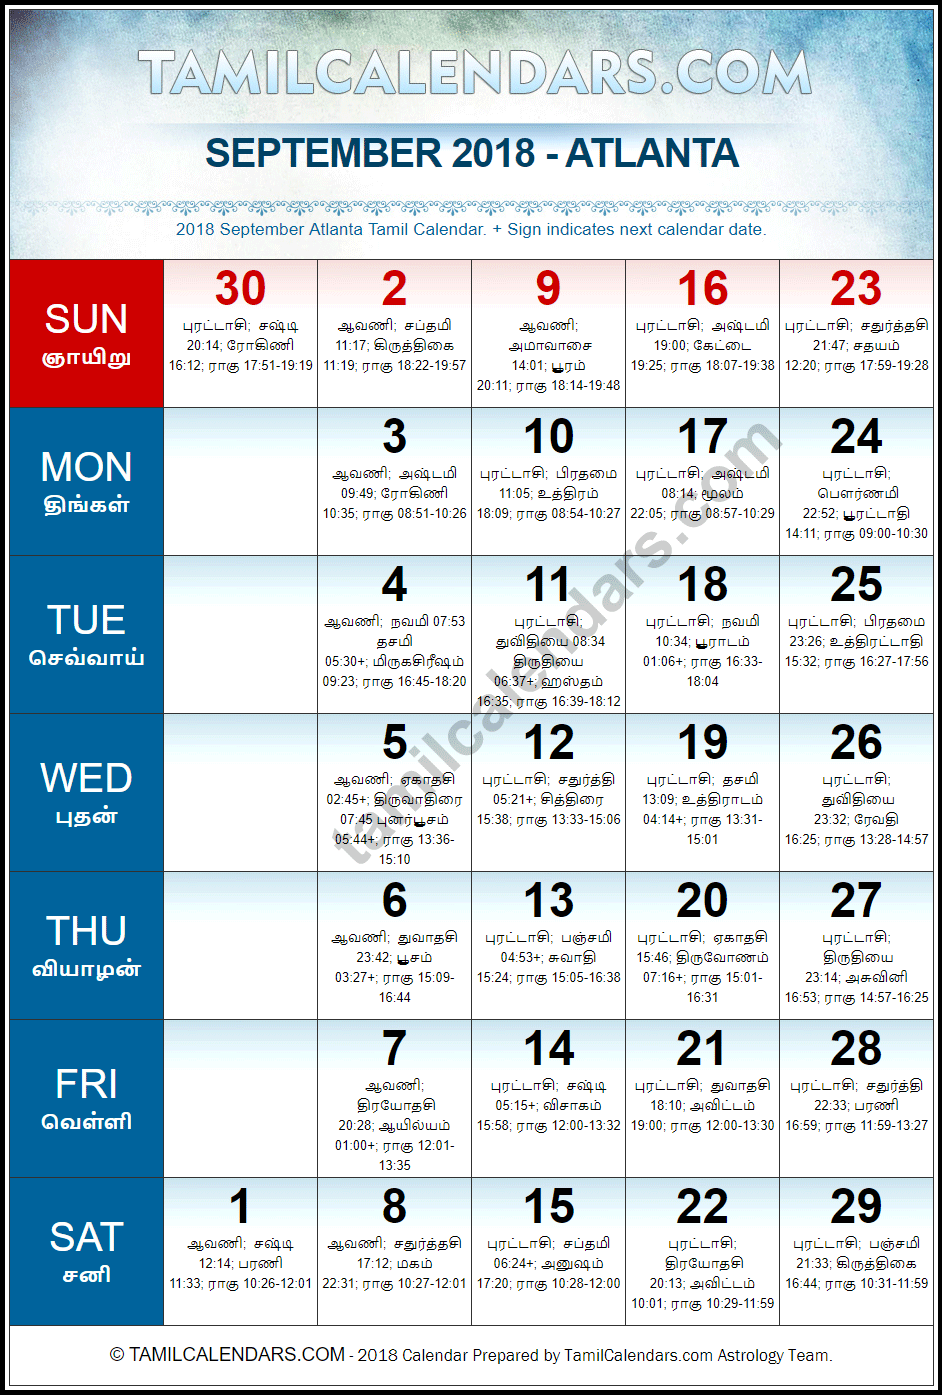 September 2018 Tamil Calendar for Atlanta, USA